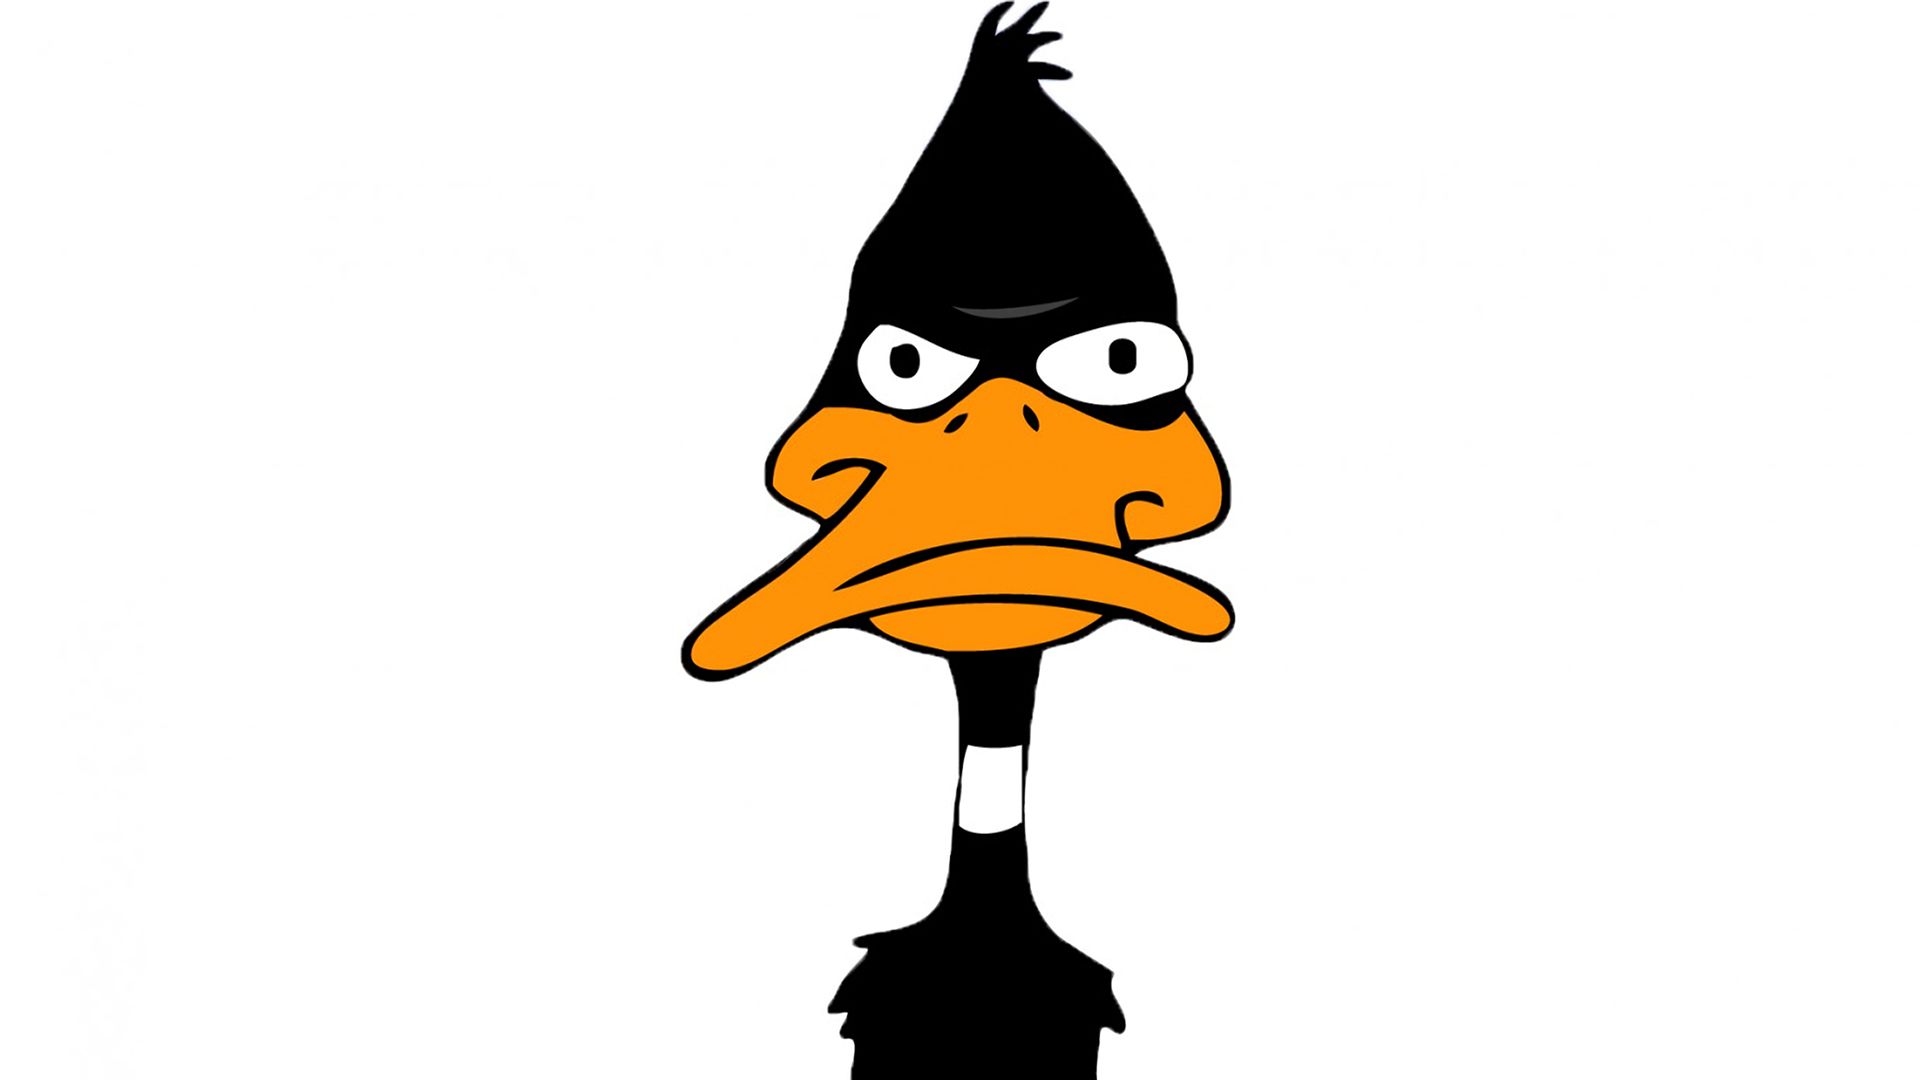 tv show, looney tunes, daffy duck Image for desktop